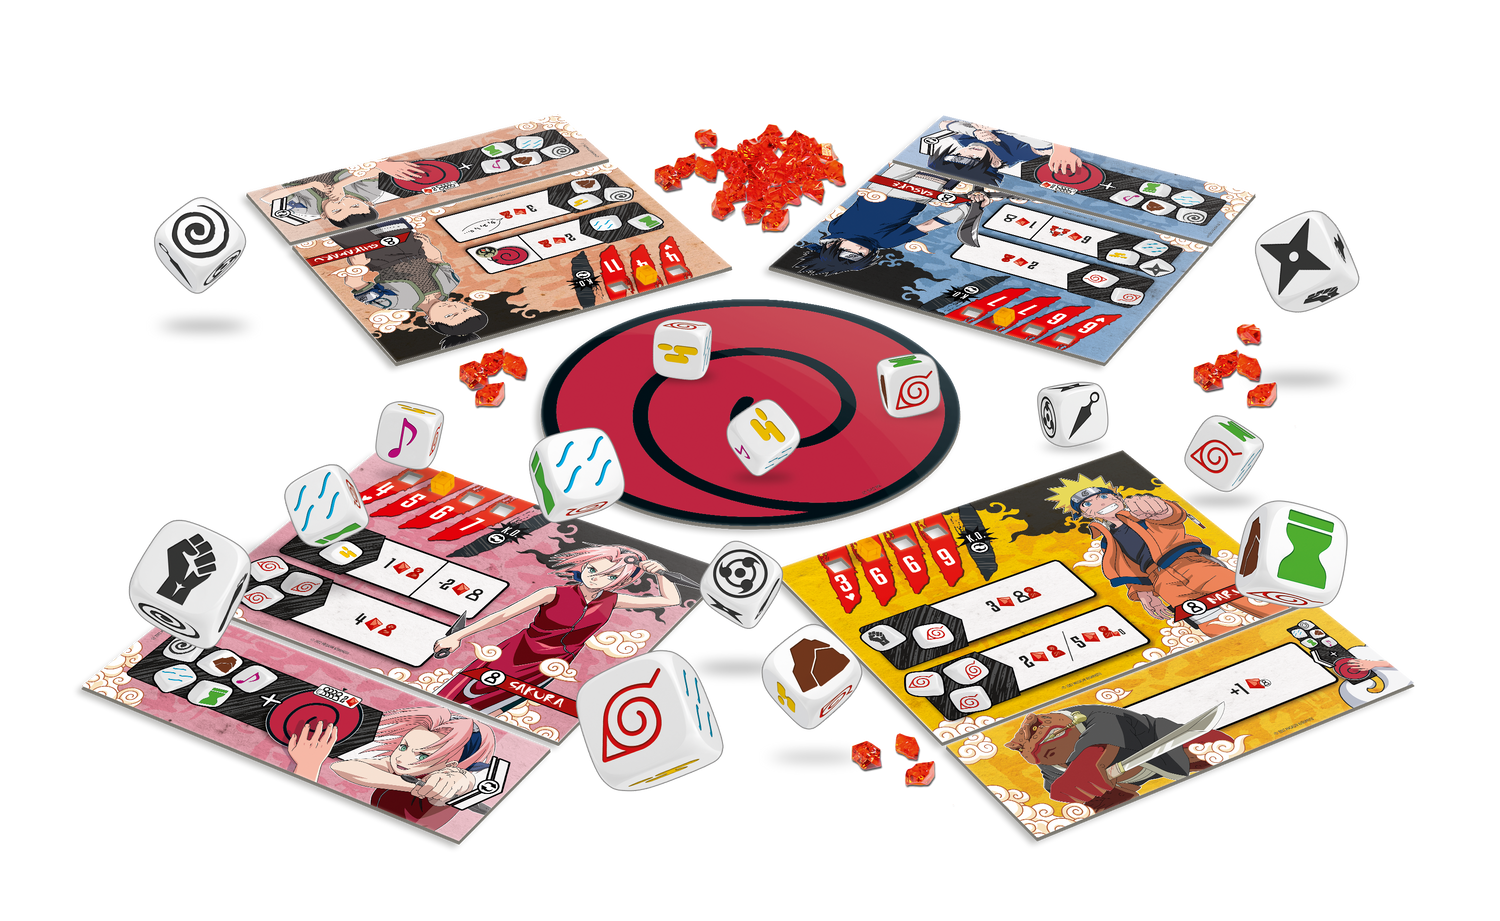 Naruto Ninja Arena anime board game box contents